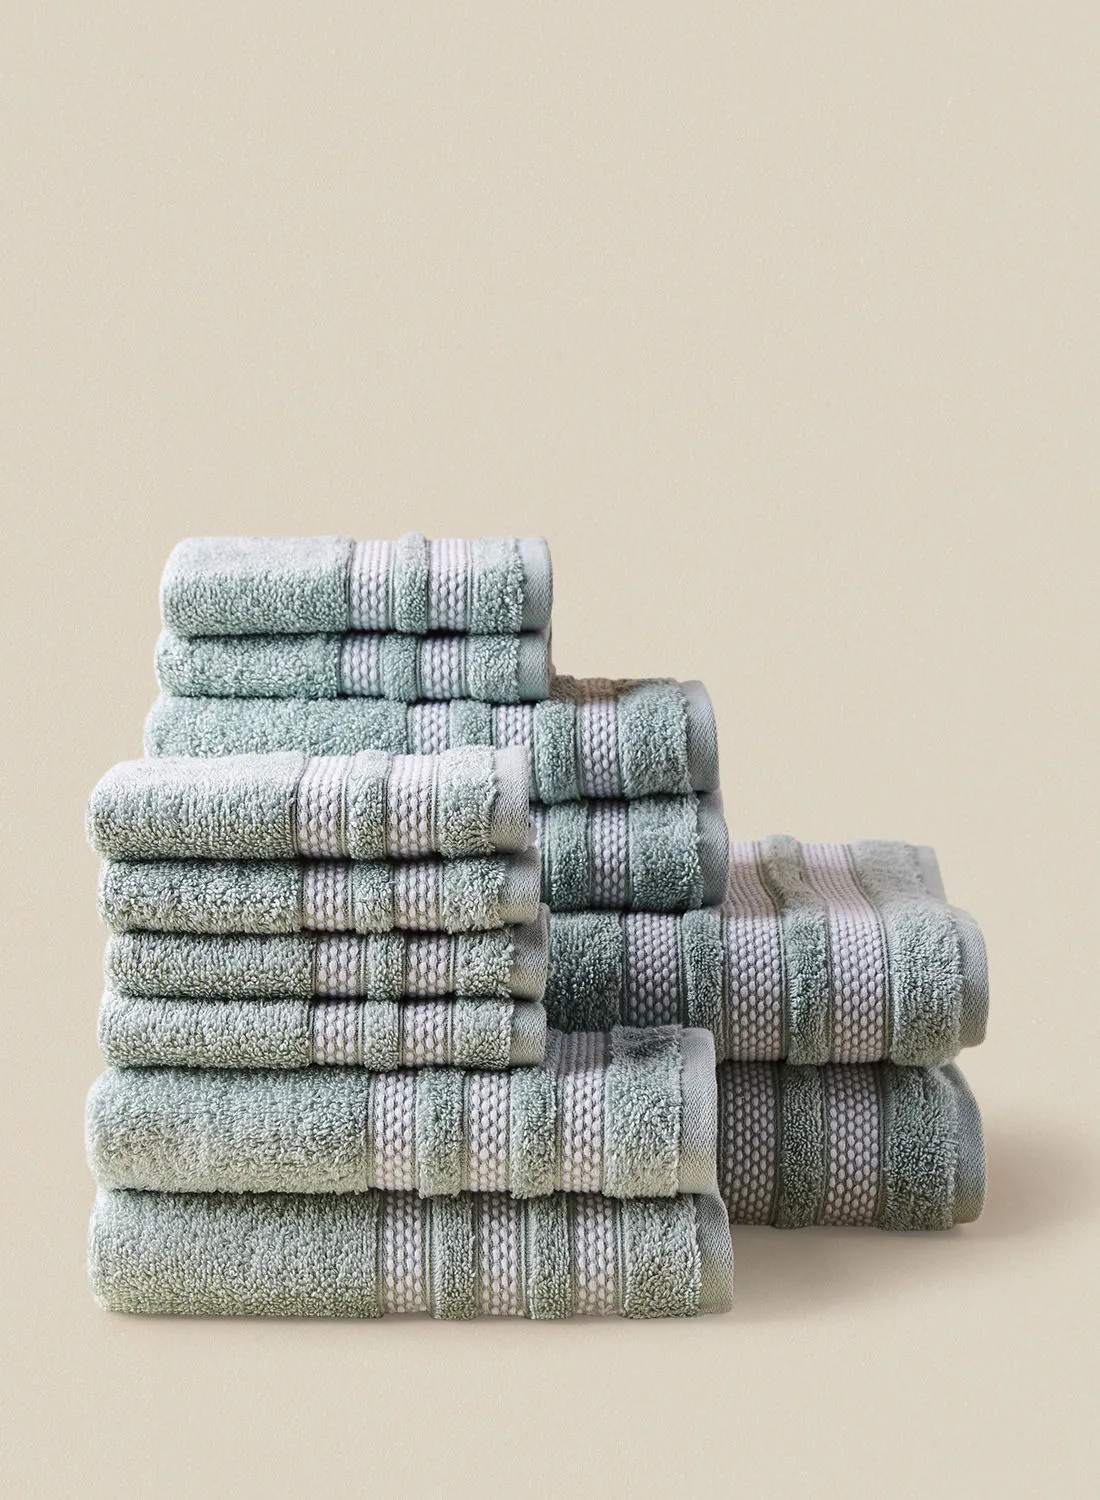 noon east 12 Piece Bathroom Towel Set - 500 GSM 100% Cotton Premium Quality - 2 Bath Towels (76x142 cm) 4 Hand Towels (41x71 cm) 6 Face Towels (33x33 cm) Light Grey Color - Highly Absorbent - Fast Dry